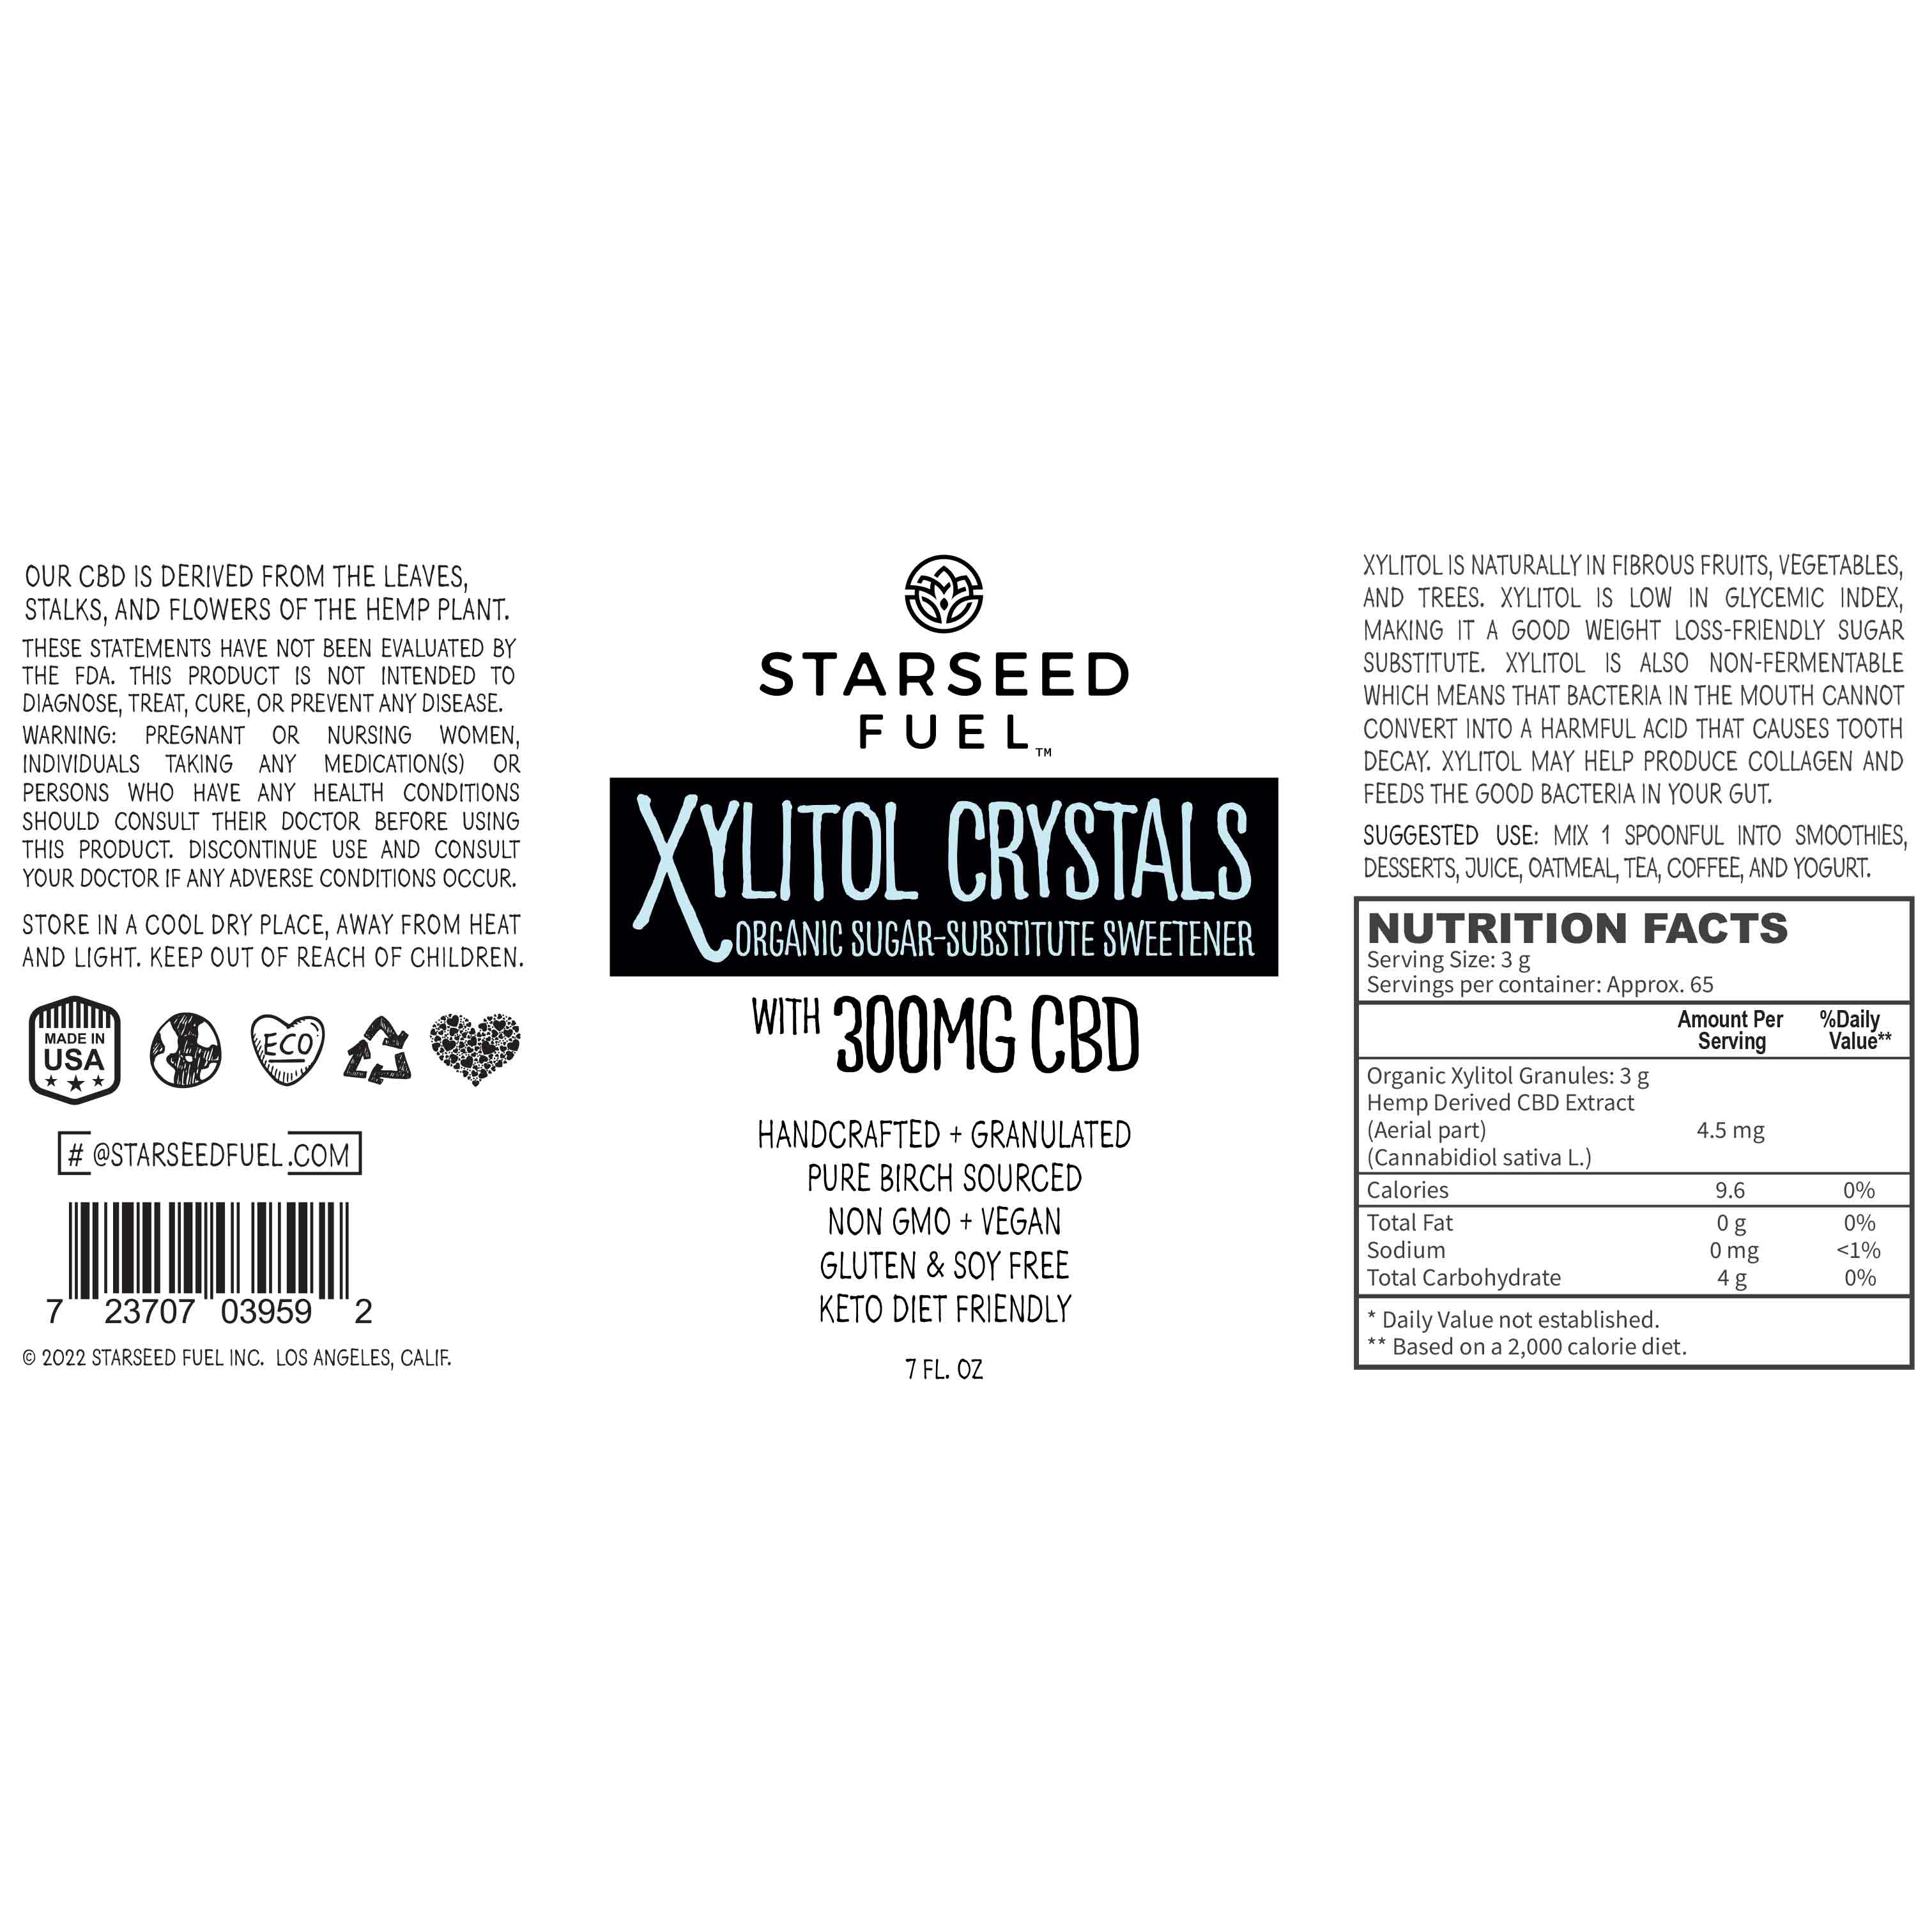 Starseed Fuel Xylitol Crystals 300mg CBD